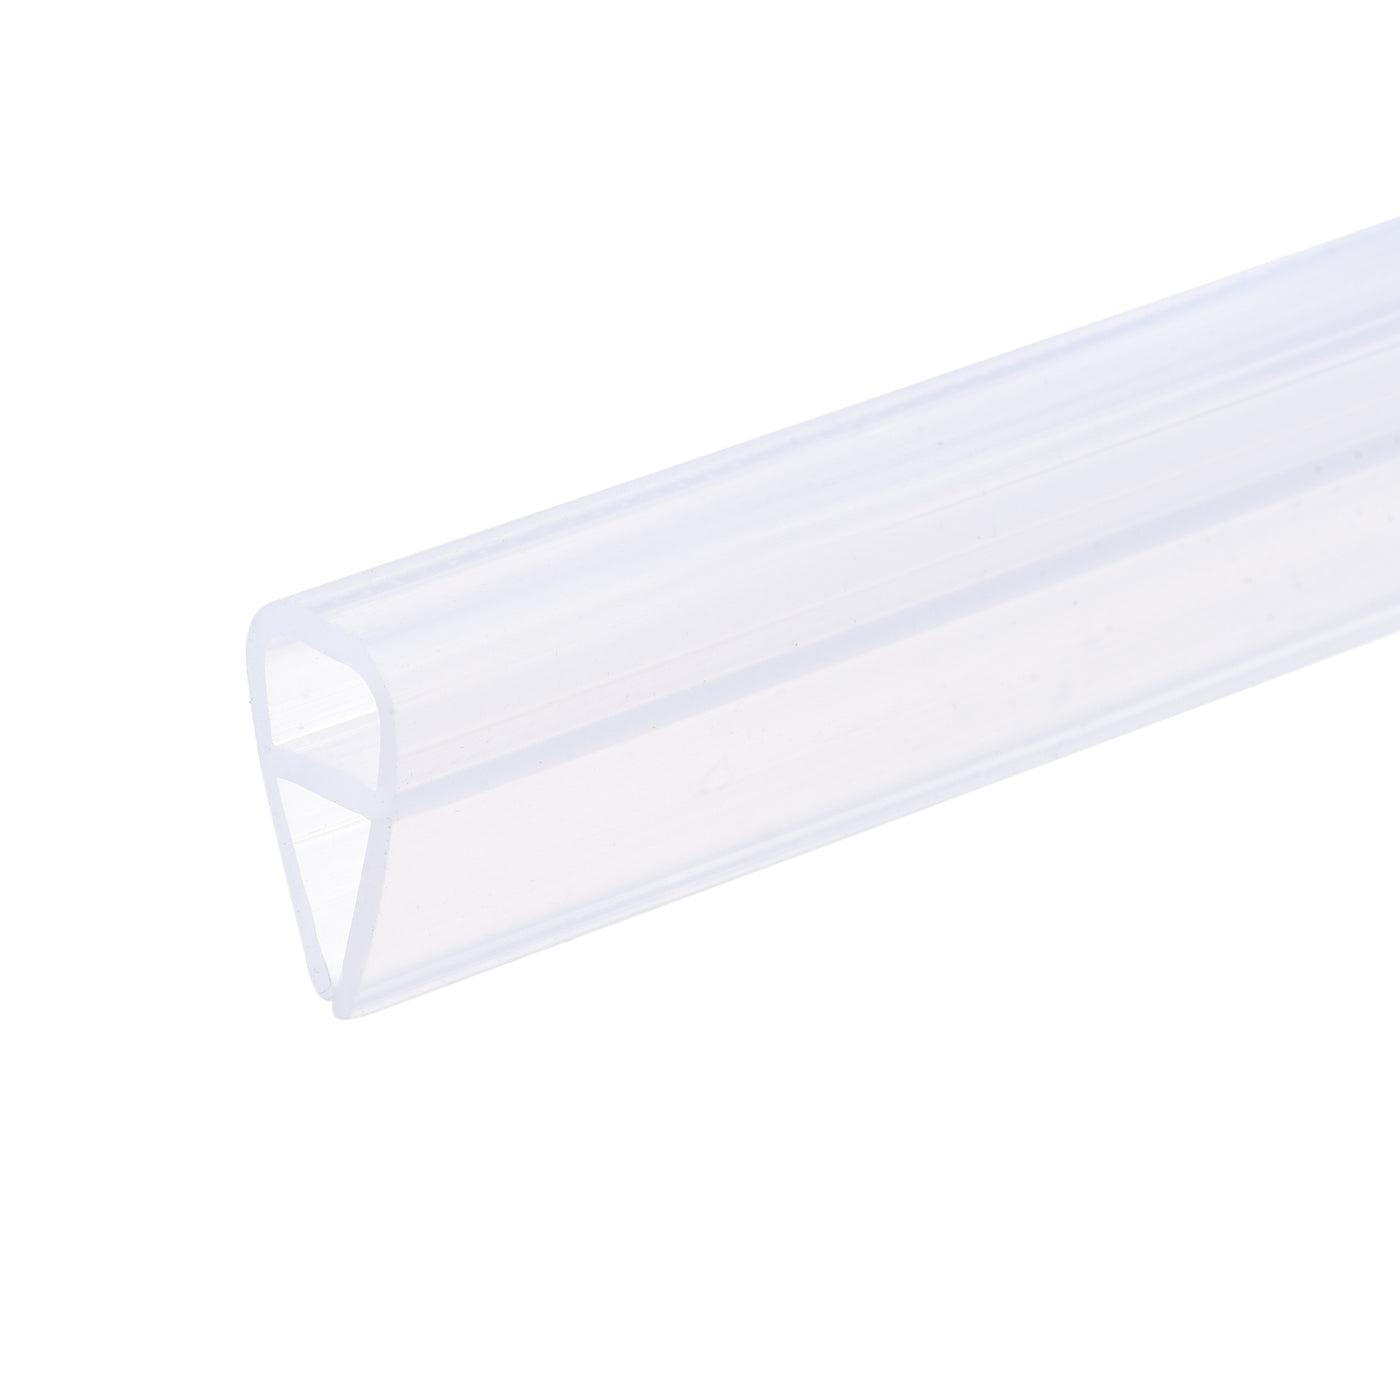 Uxcell Uxcell Frameless Glass Shower Door Sweep 59.06" for 1/4"(6mm) Glass U-Type Seal Strip